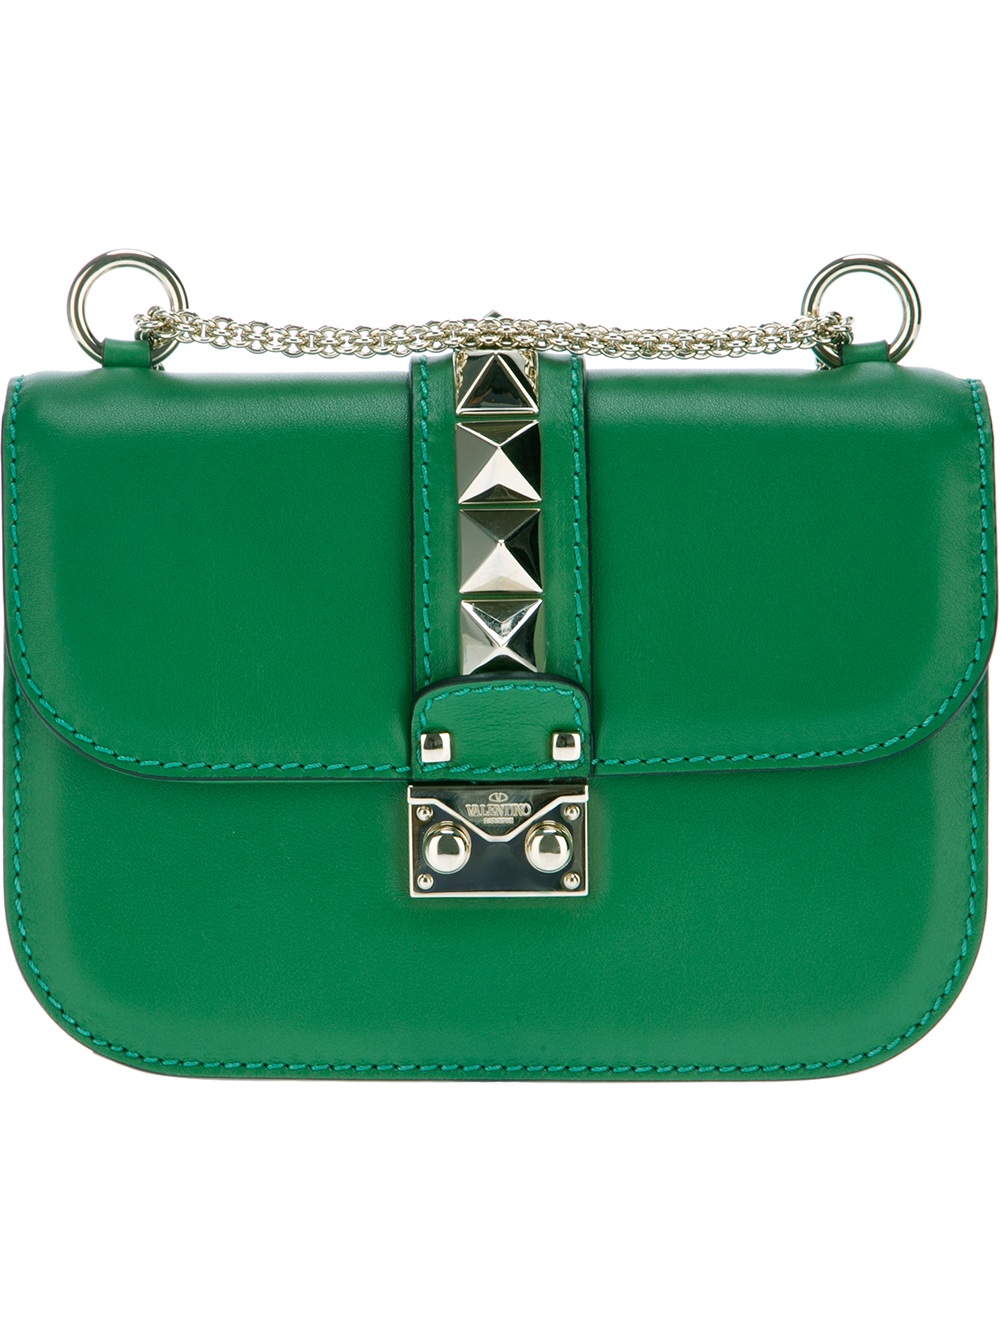 Valentino Studded Shoulder Bag in Green | Lyst